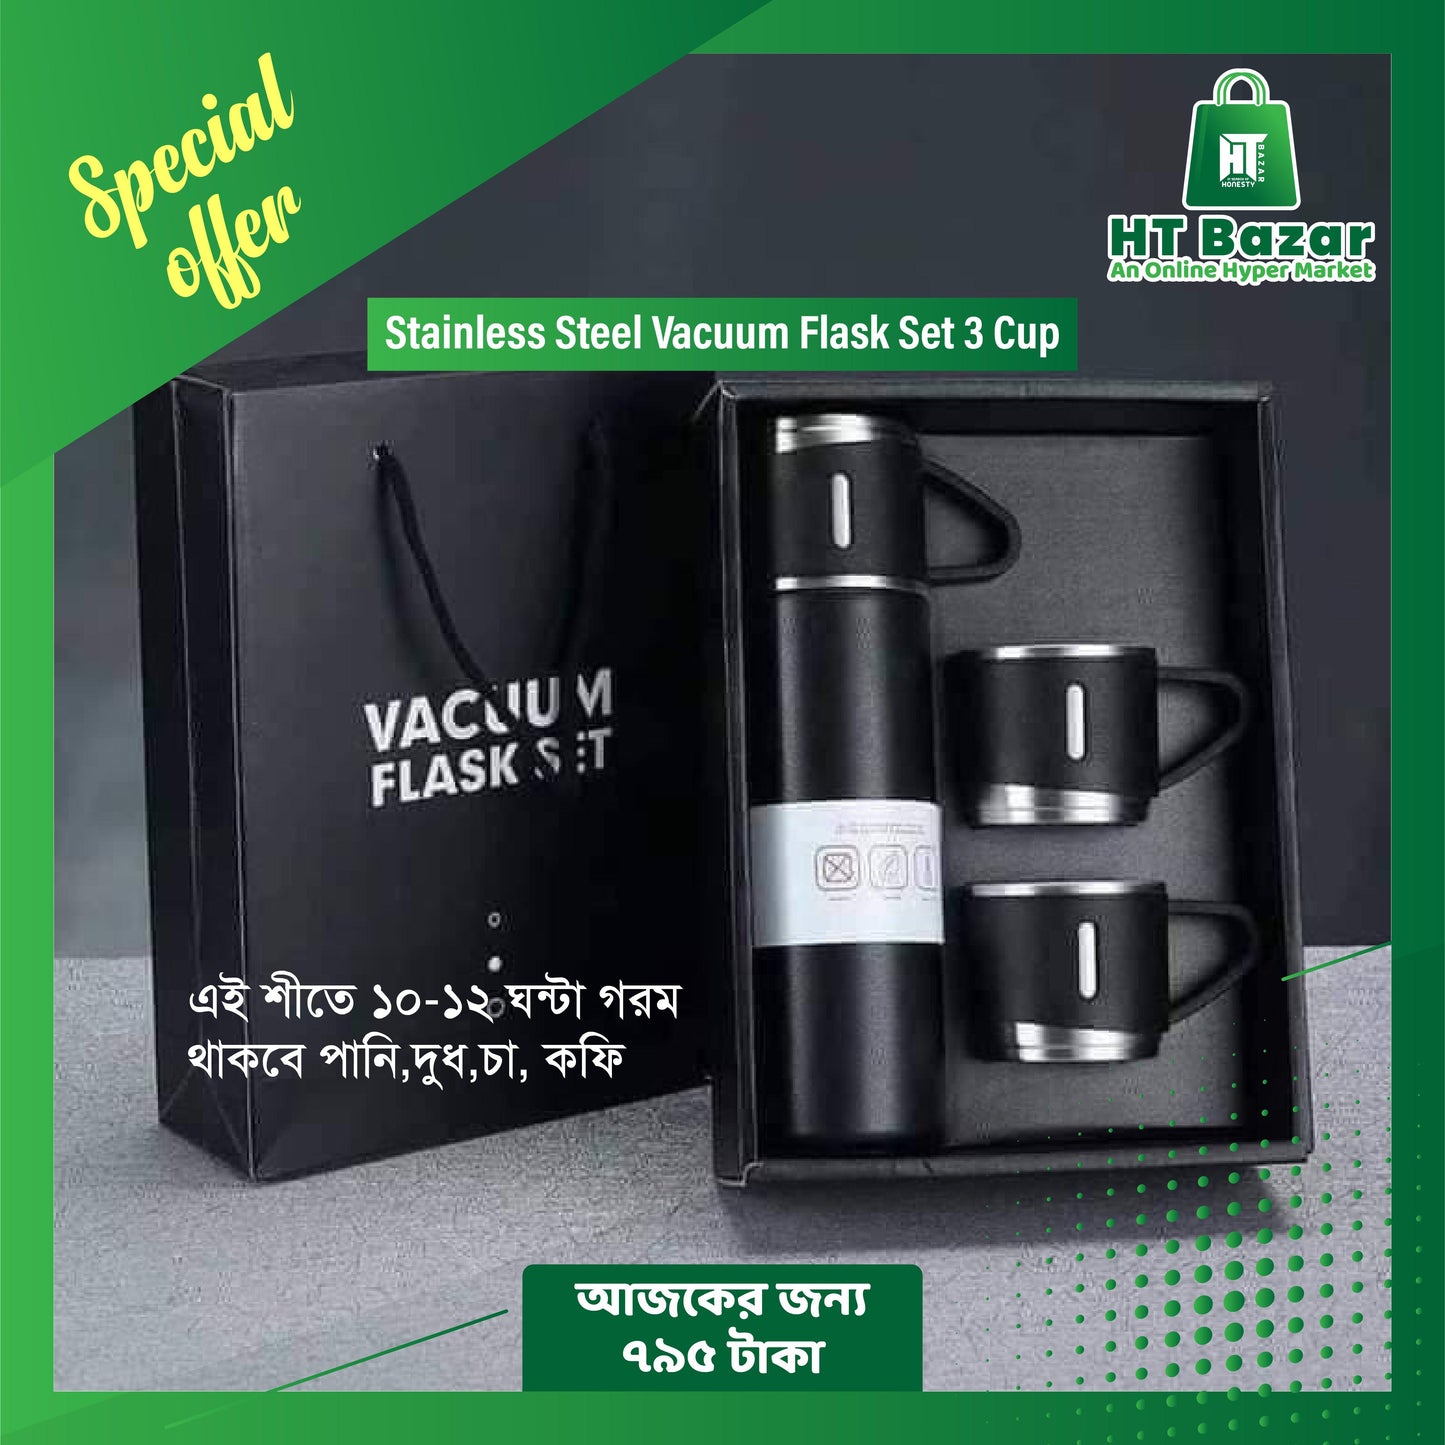 Vacuum Flask Set - HT Bazar